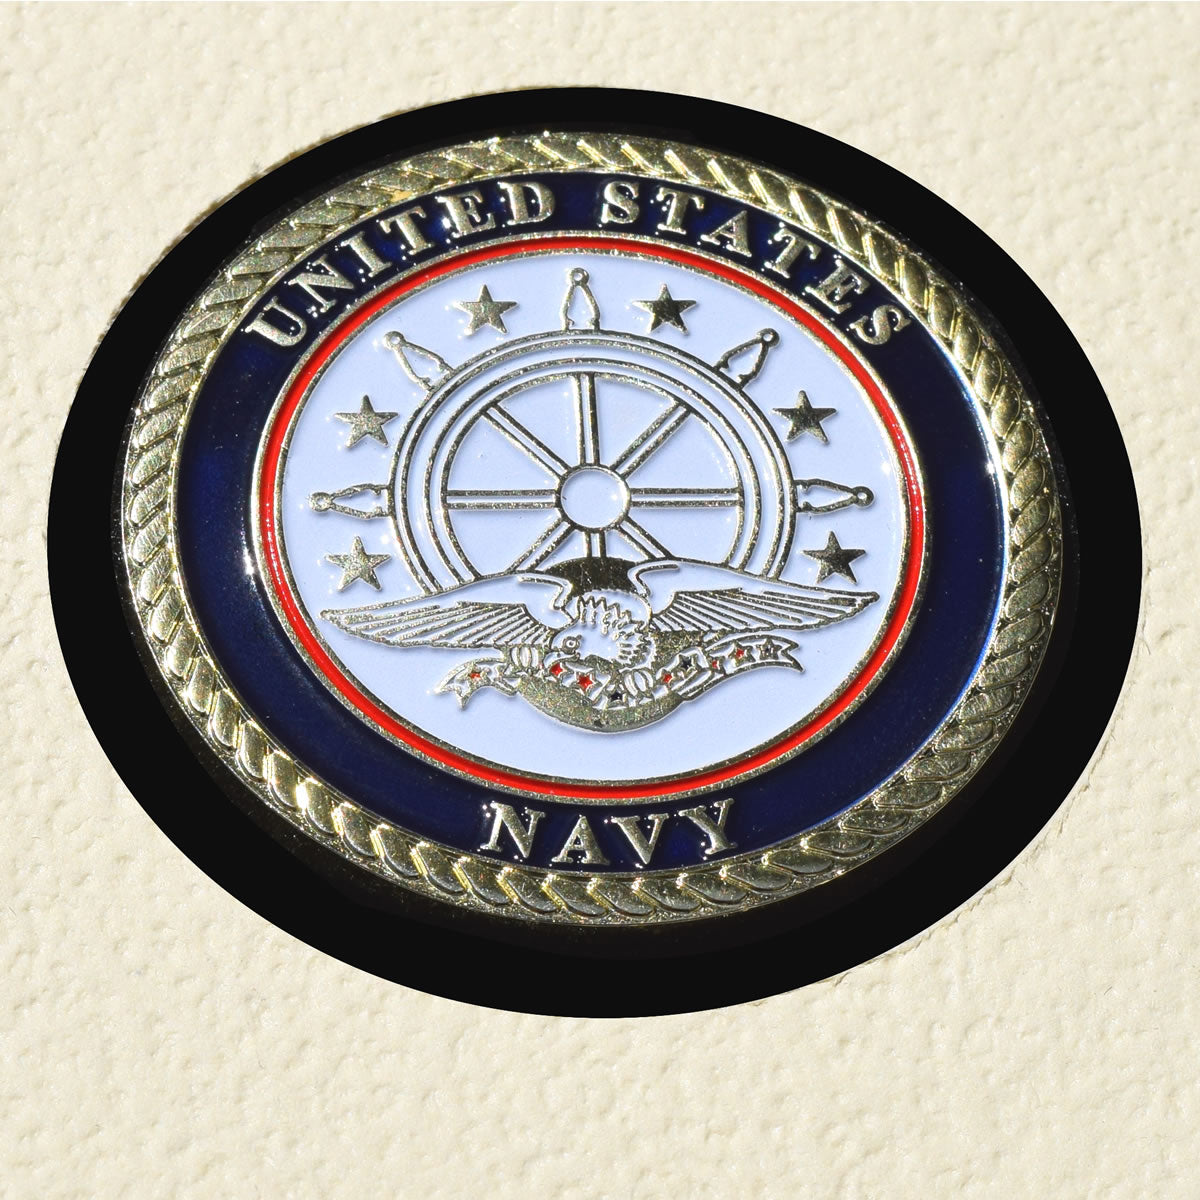 USS TURNER JOY DD-951 Detailed Coin